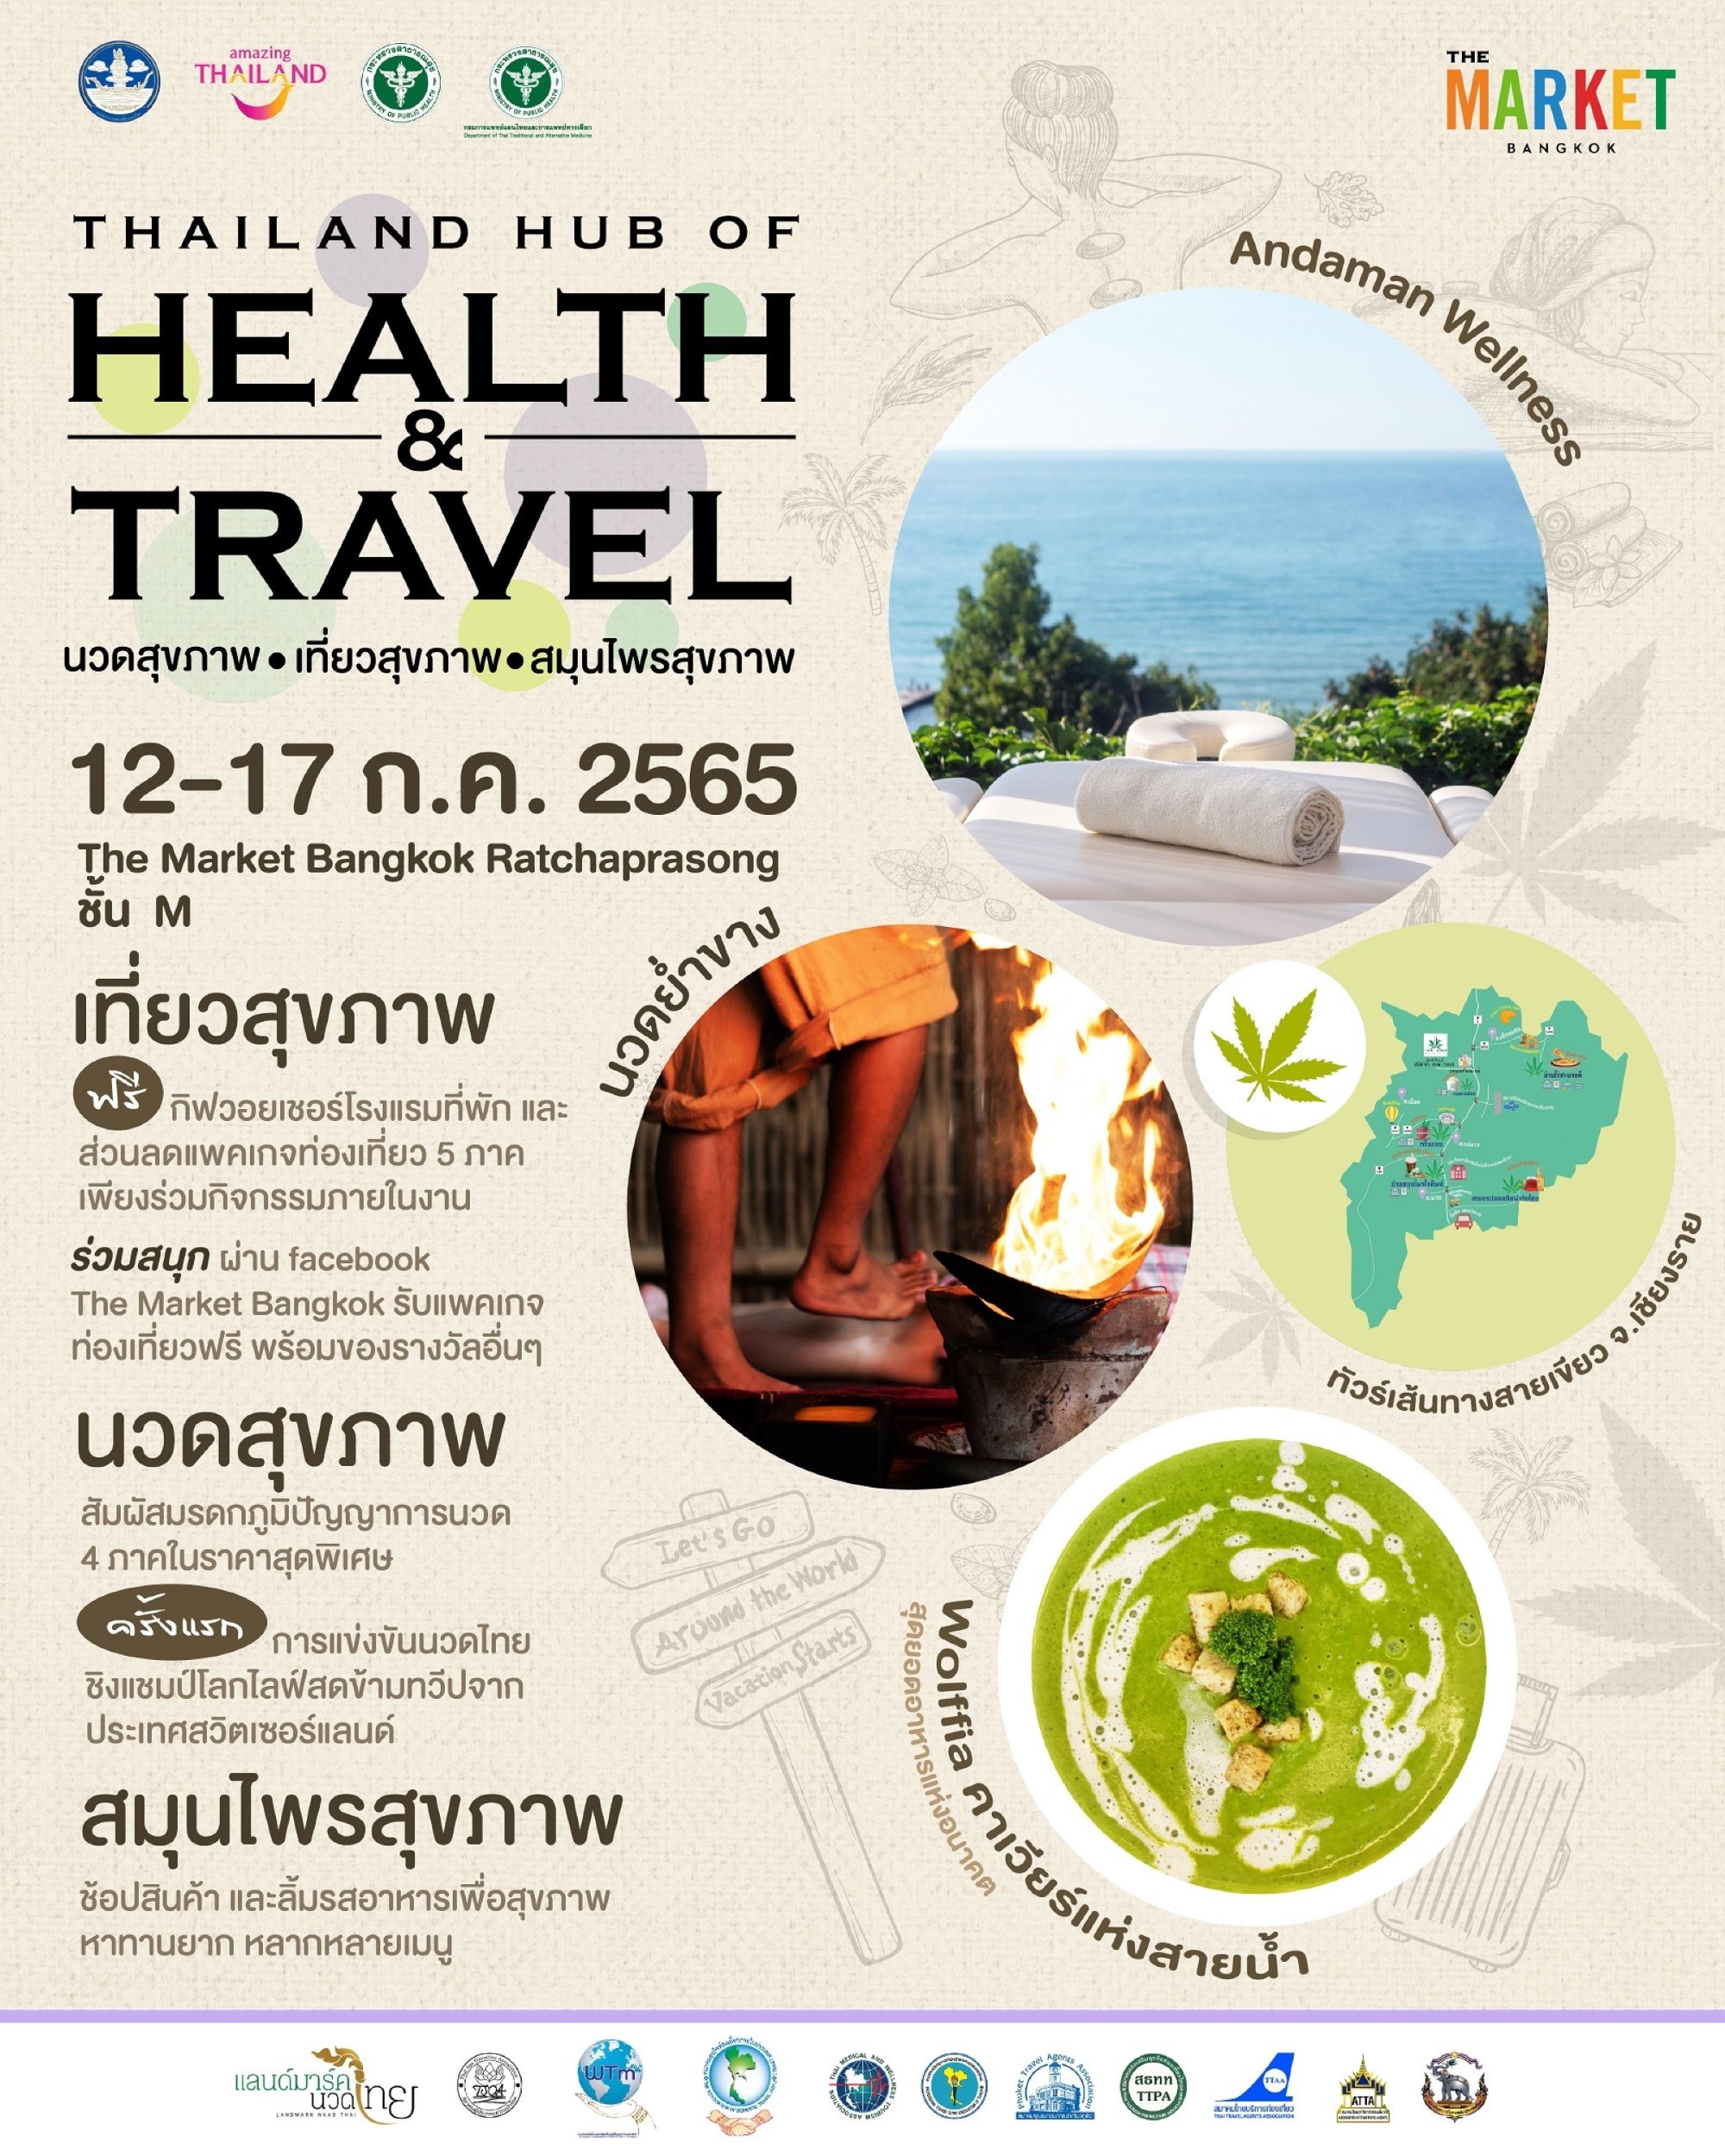 travel to thailand health